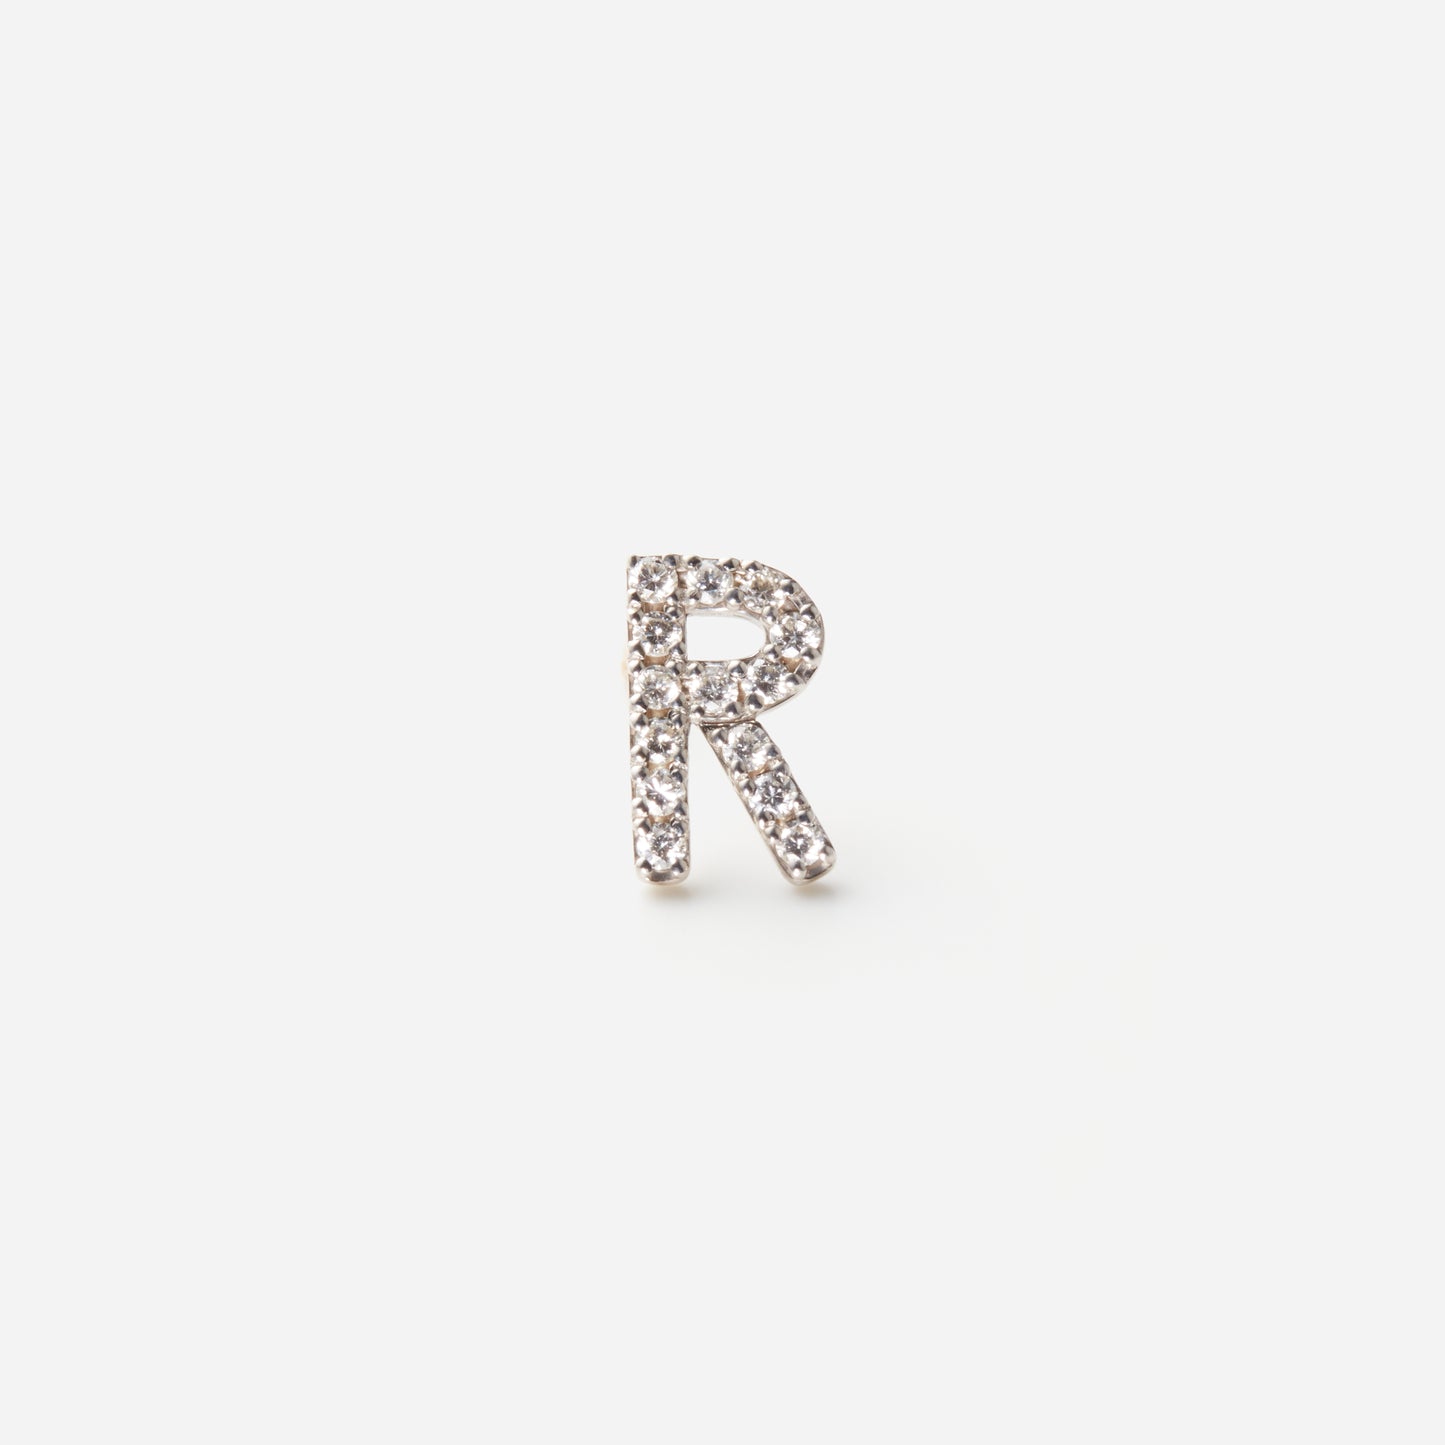 Symbol Pierced earring "R"